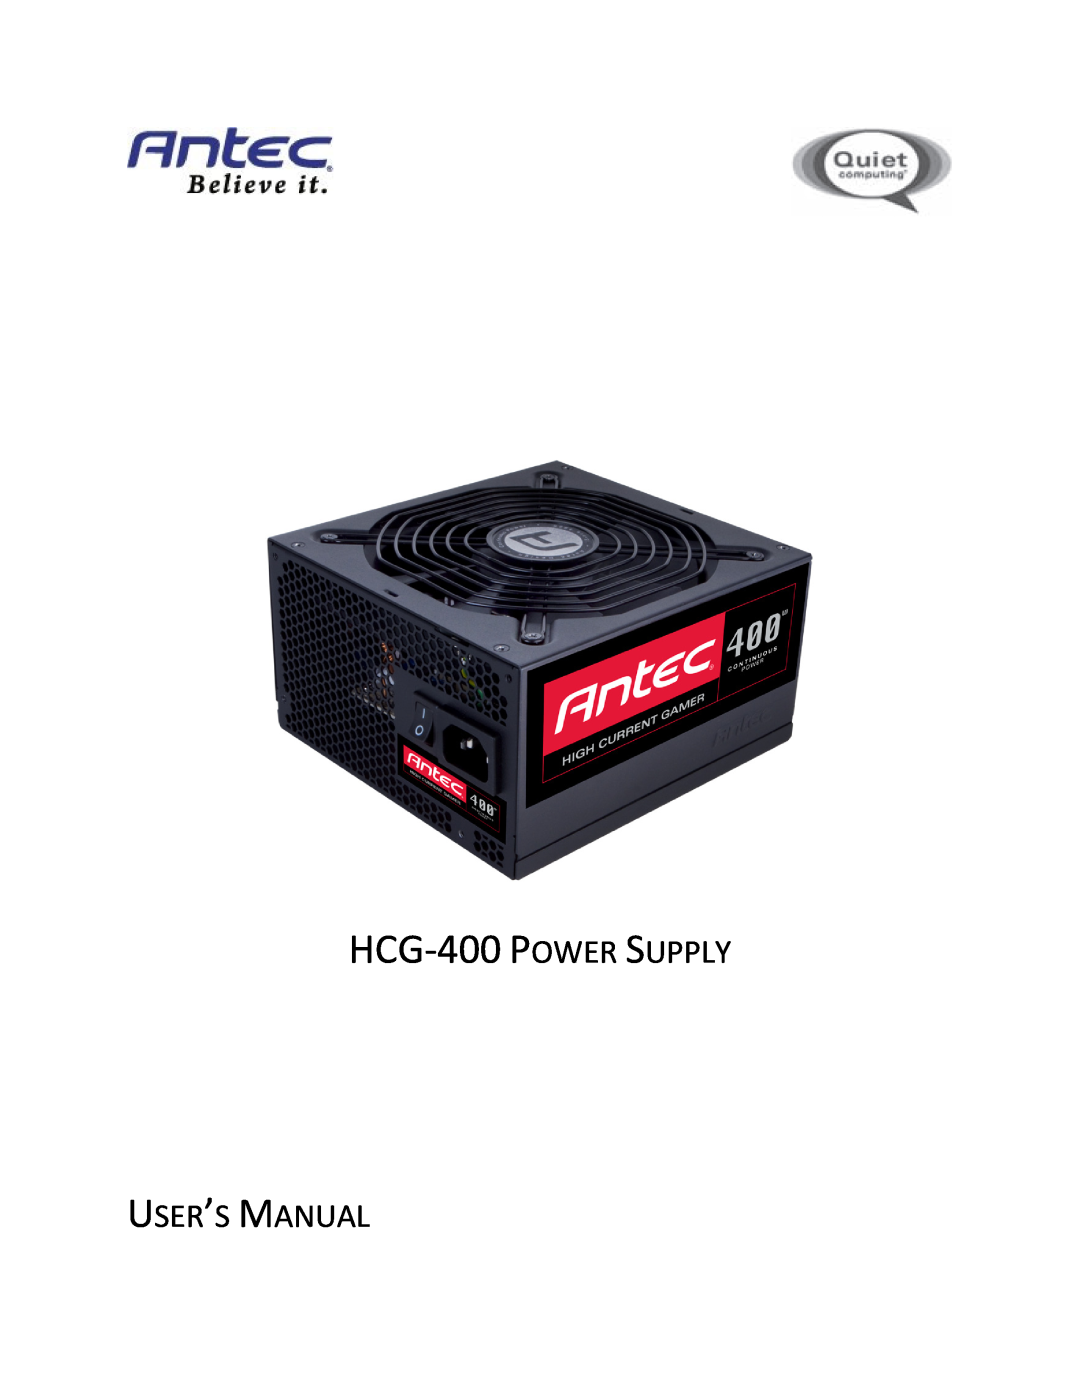 Antec user manual HCG-400 POWER SUPPLY, User’S Manual 